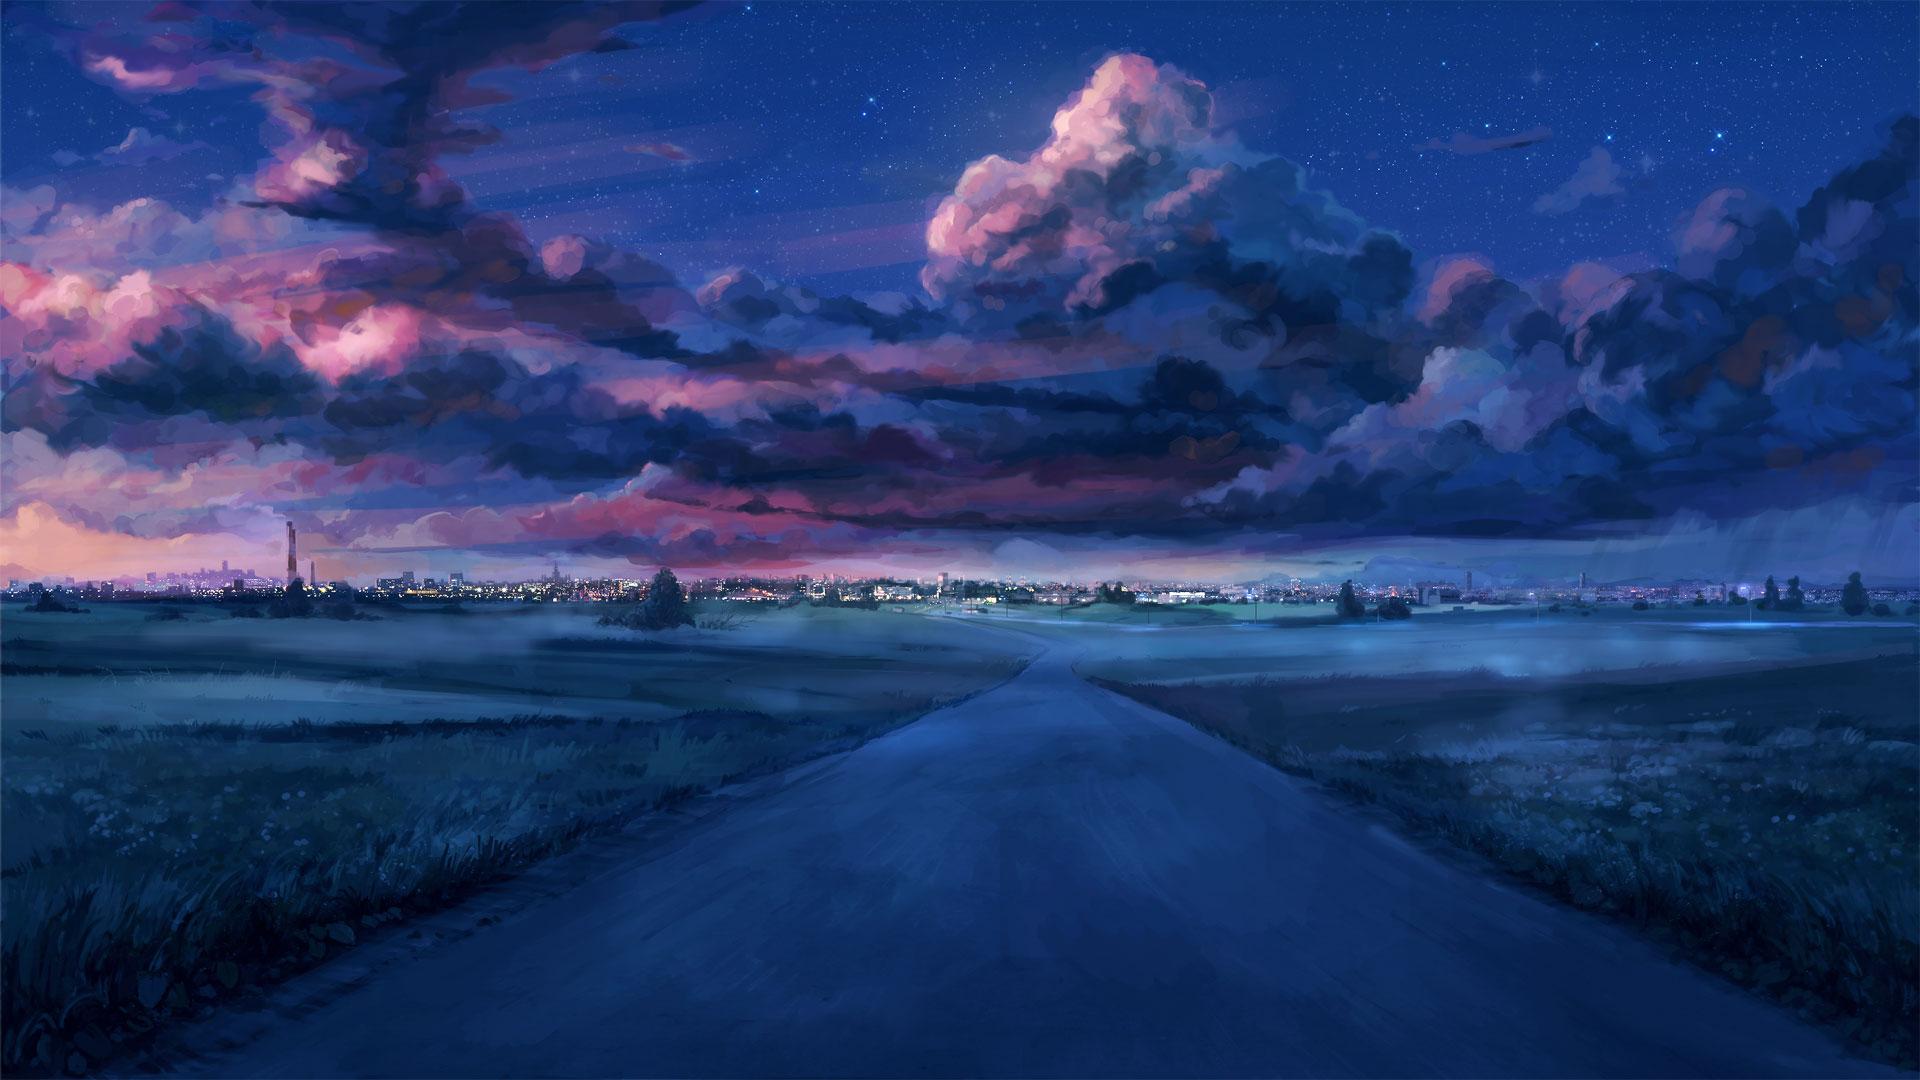 Anime Night Scenery, HD Anime, 4k Wallpaper, Image, Background